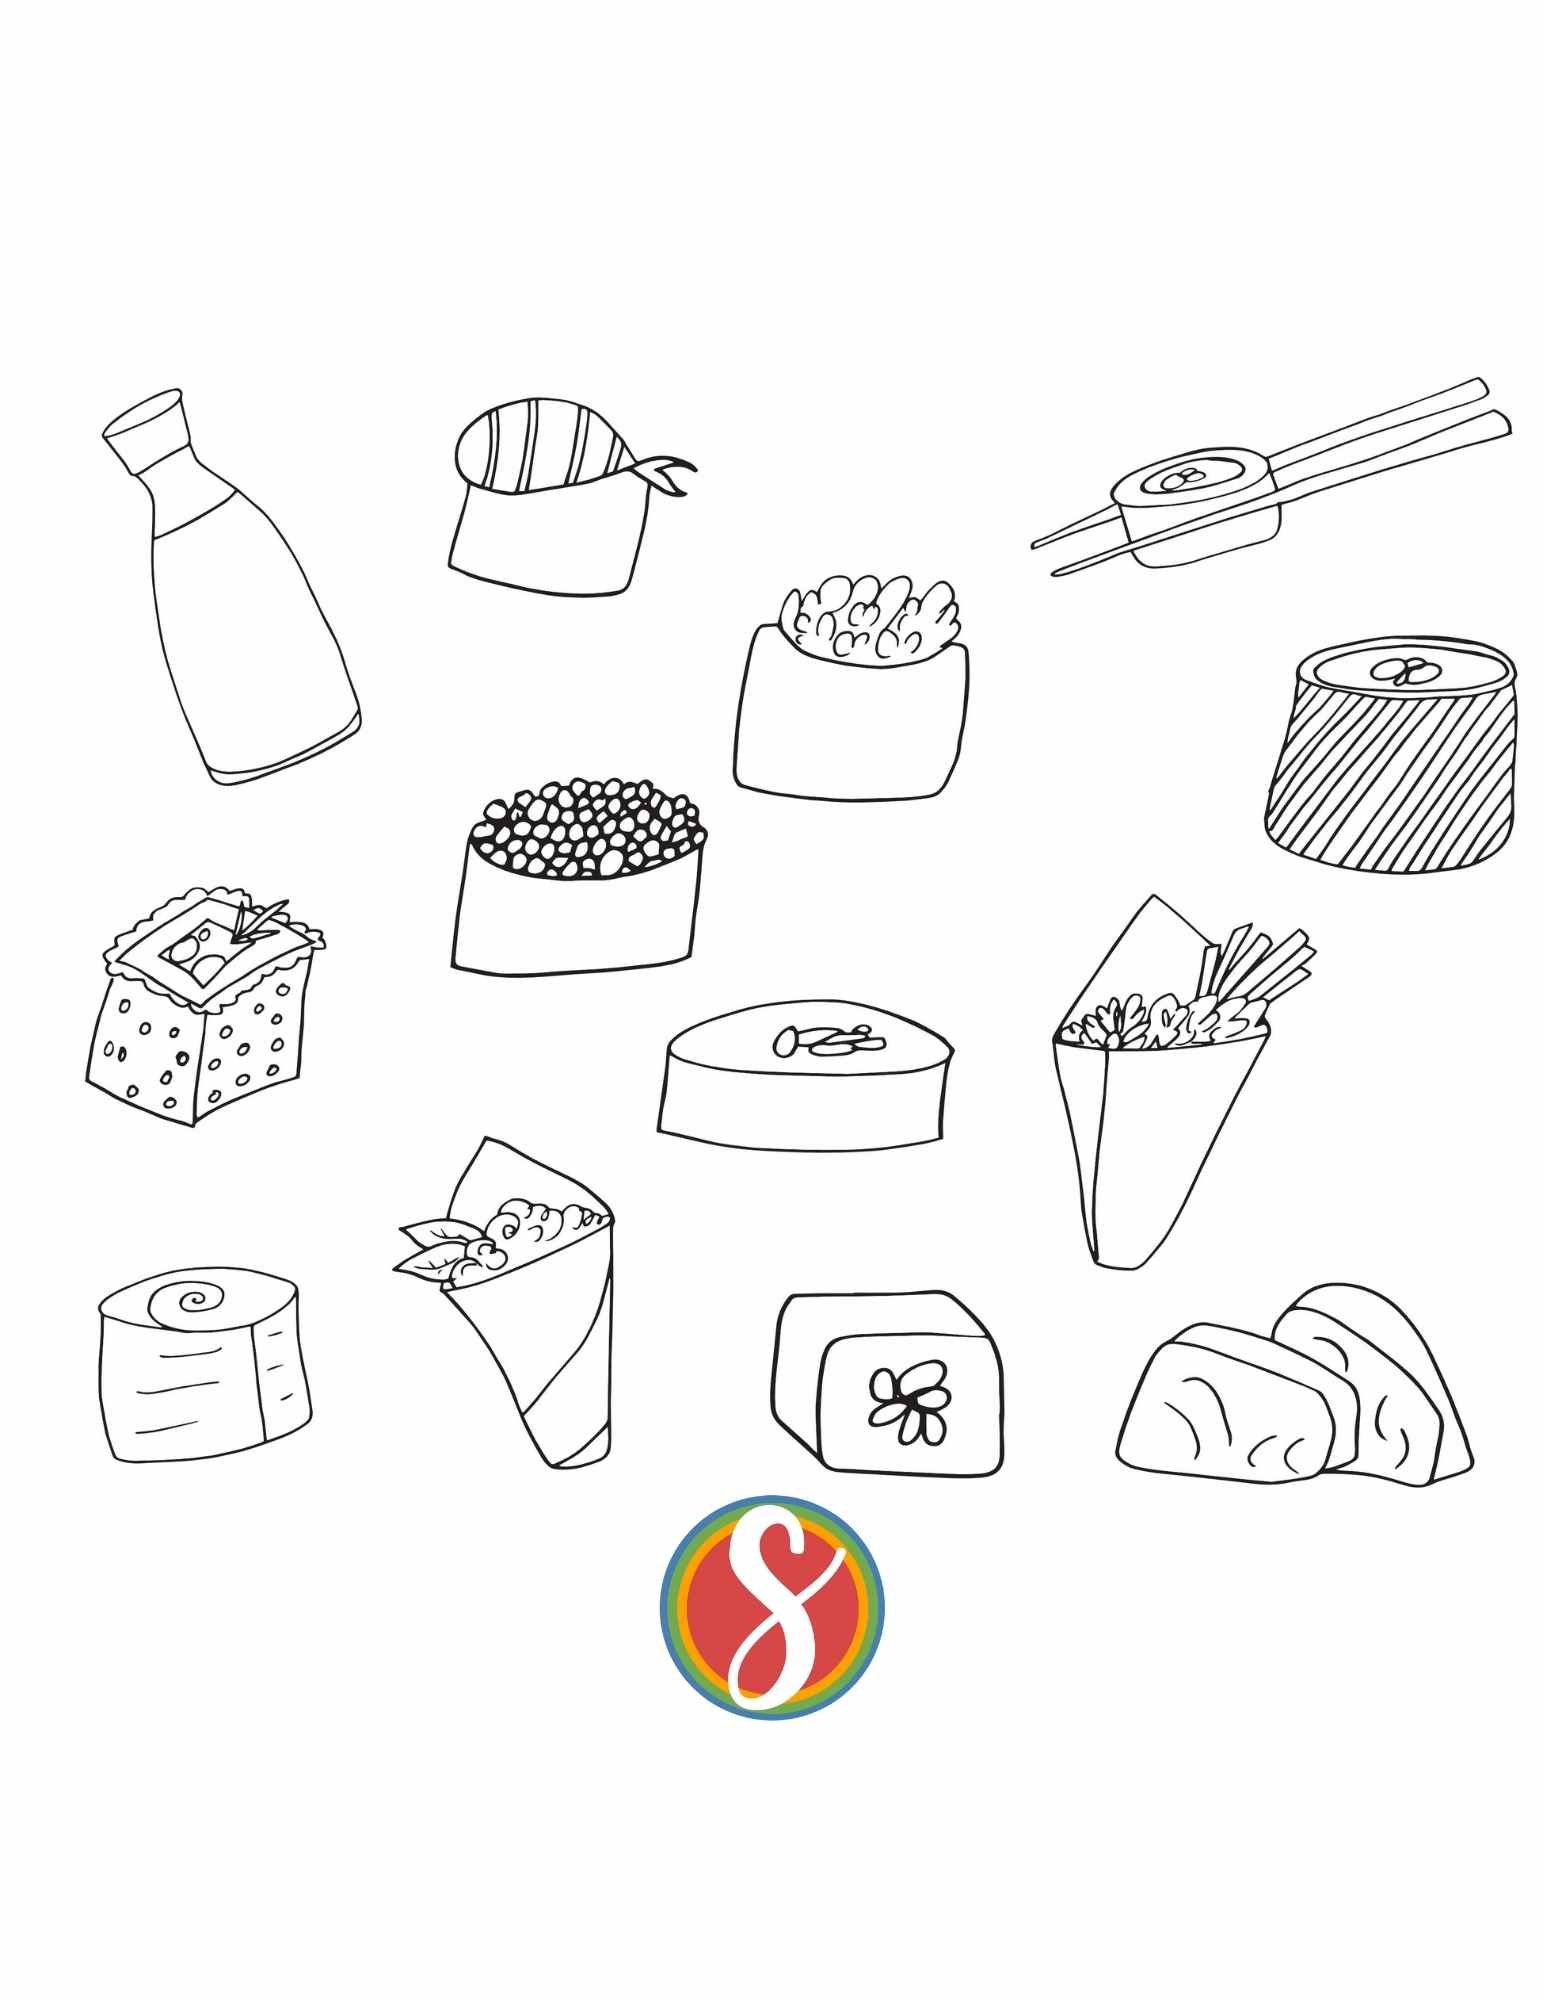 Free sushi coloring pages â stevie doodles